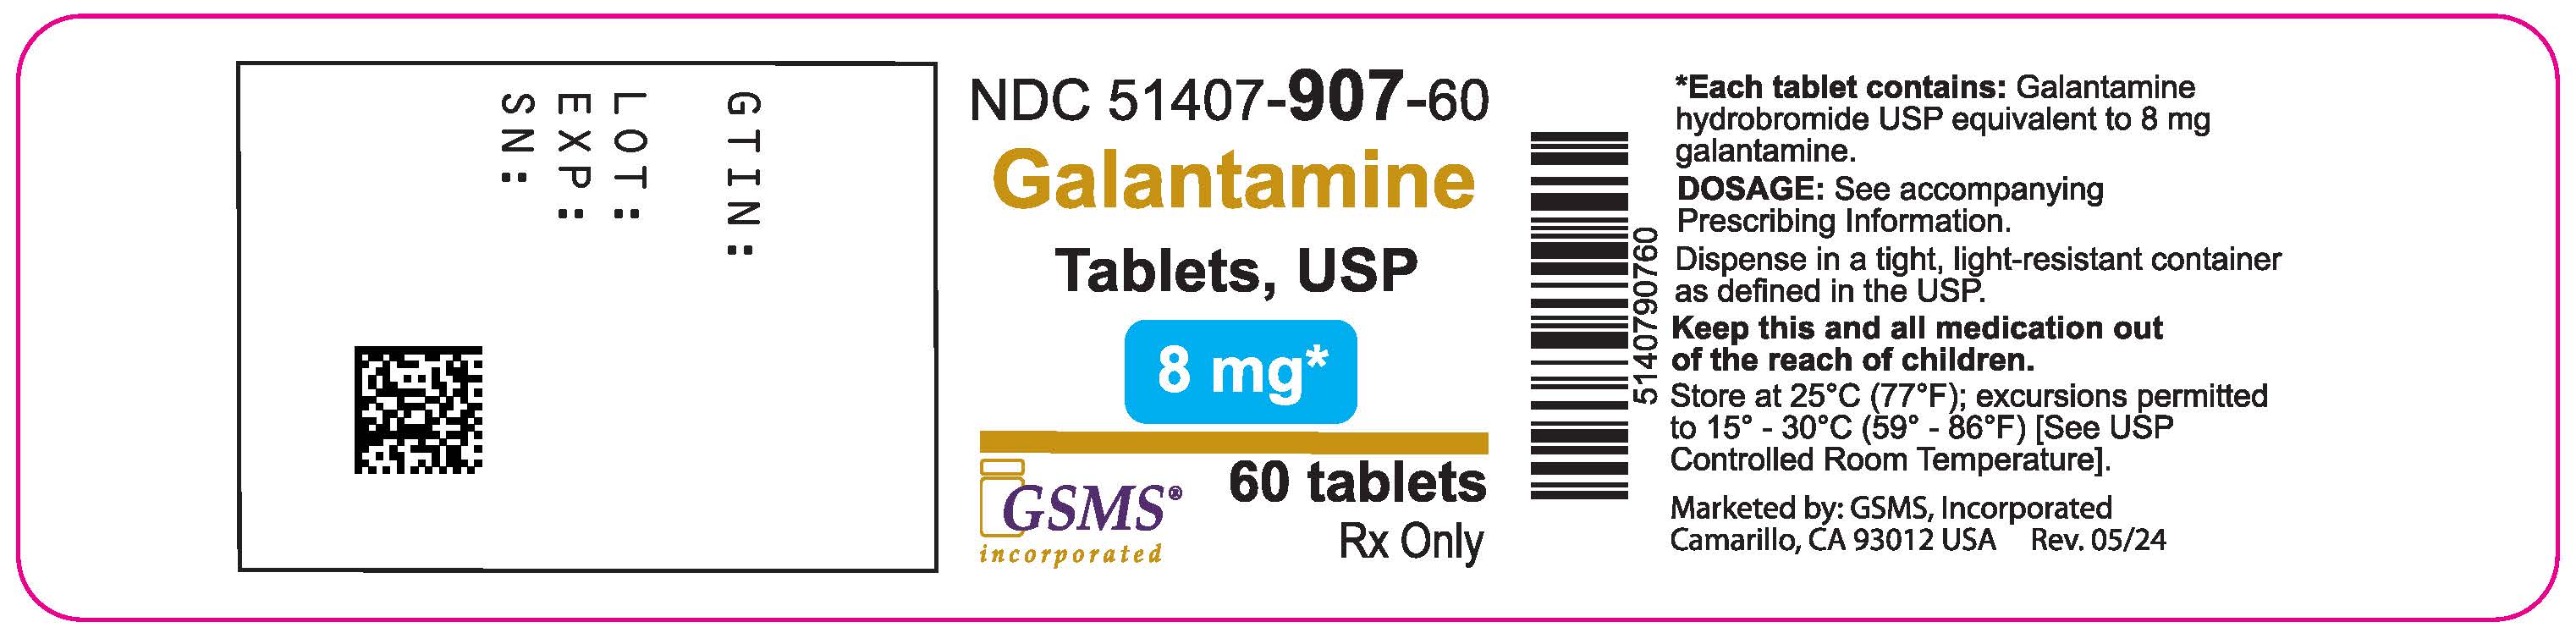 51407-907-60OL - Galantamine 8 mg - Rev. 0524.jpg